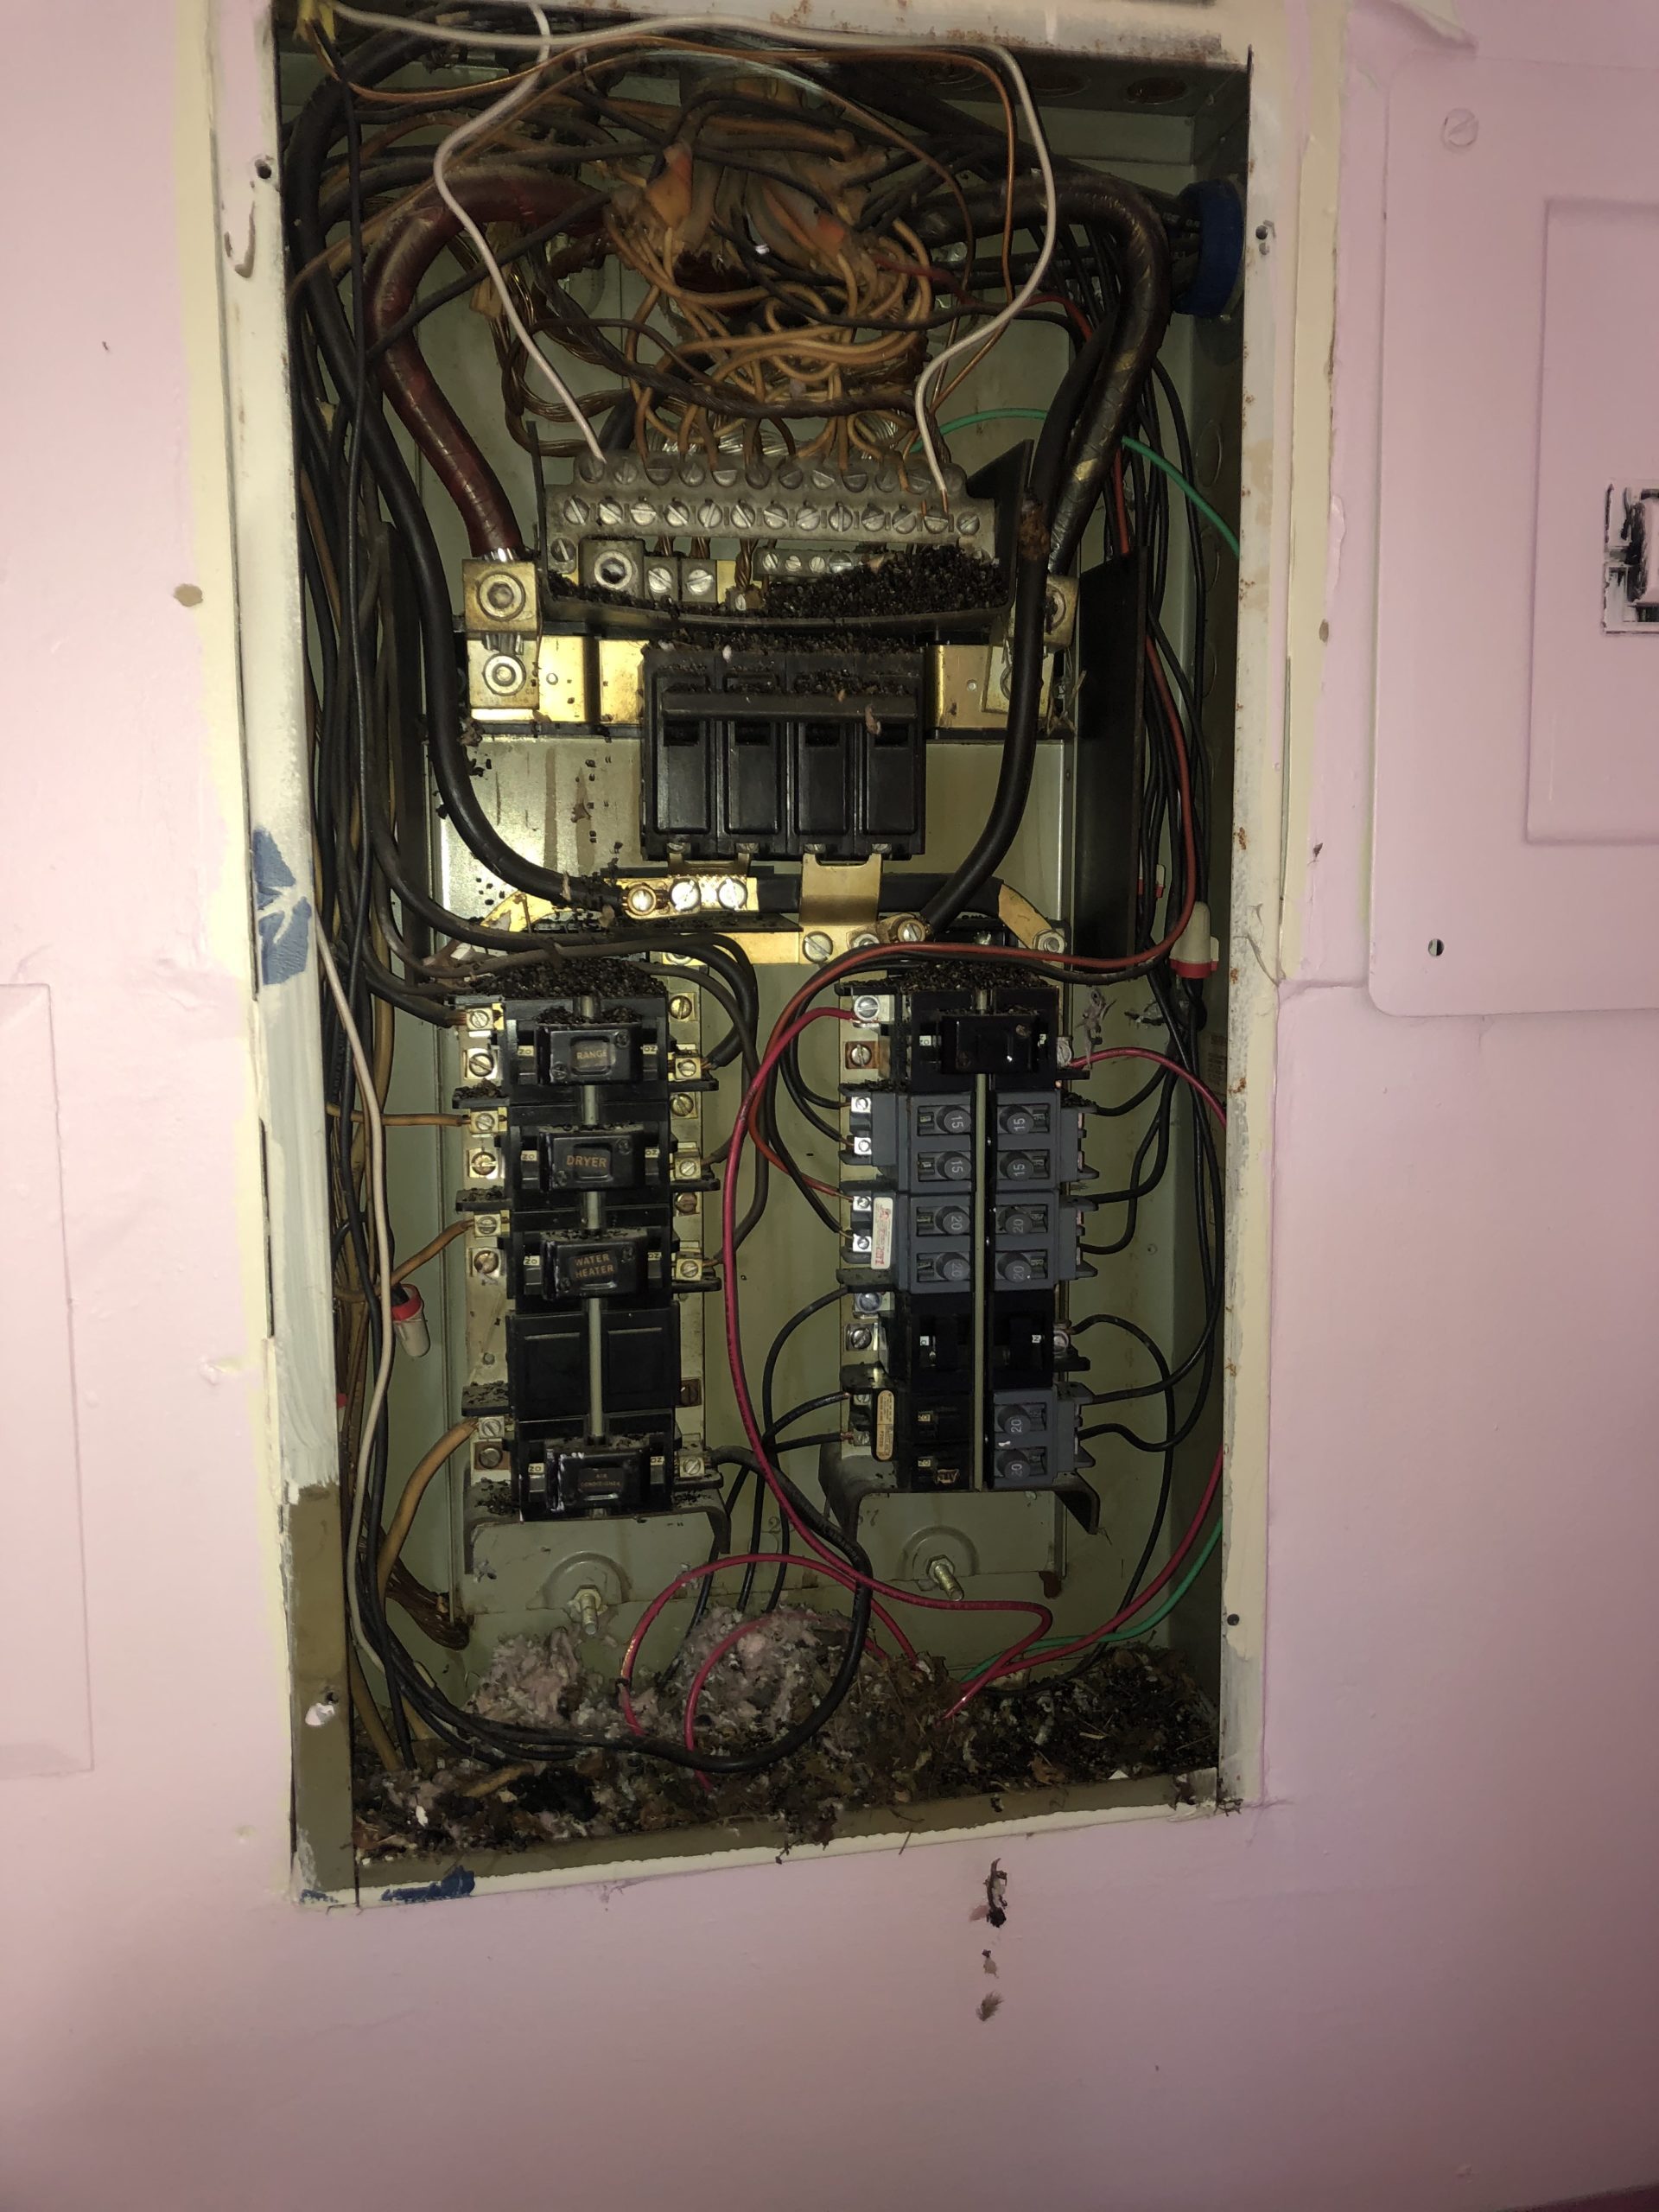 DK-electrical-solutions-electrical-repair-6332